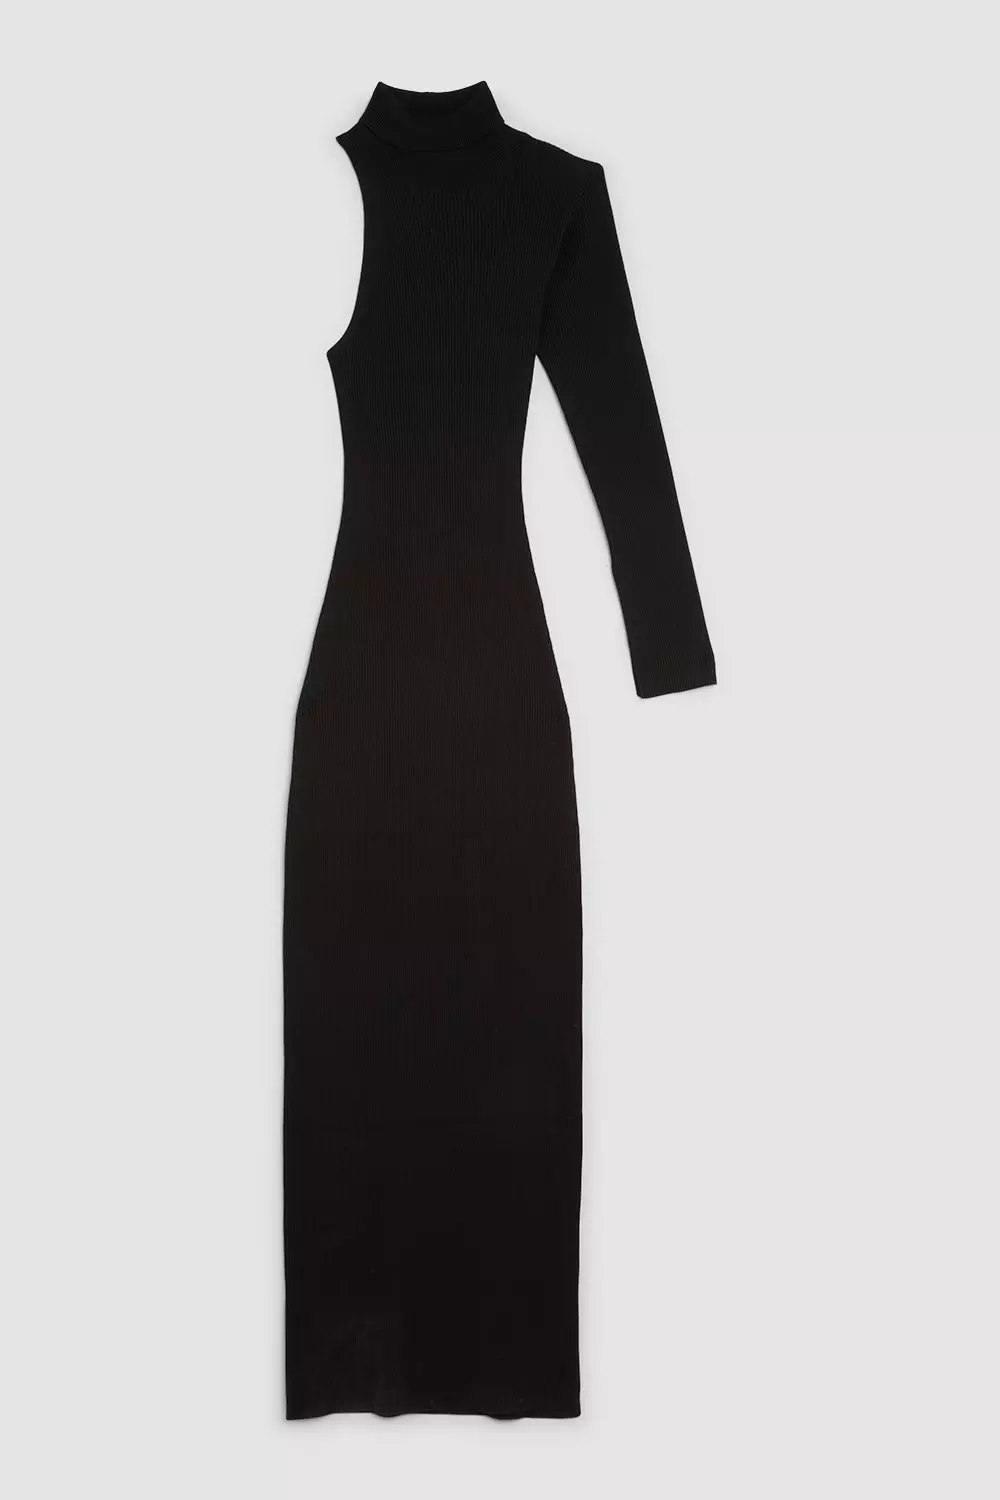 A.W.A.K.E. MODE Cream And Black Bra Print Knitted Dress - Women's -  Viscose/polyester